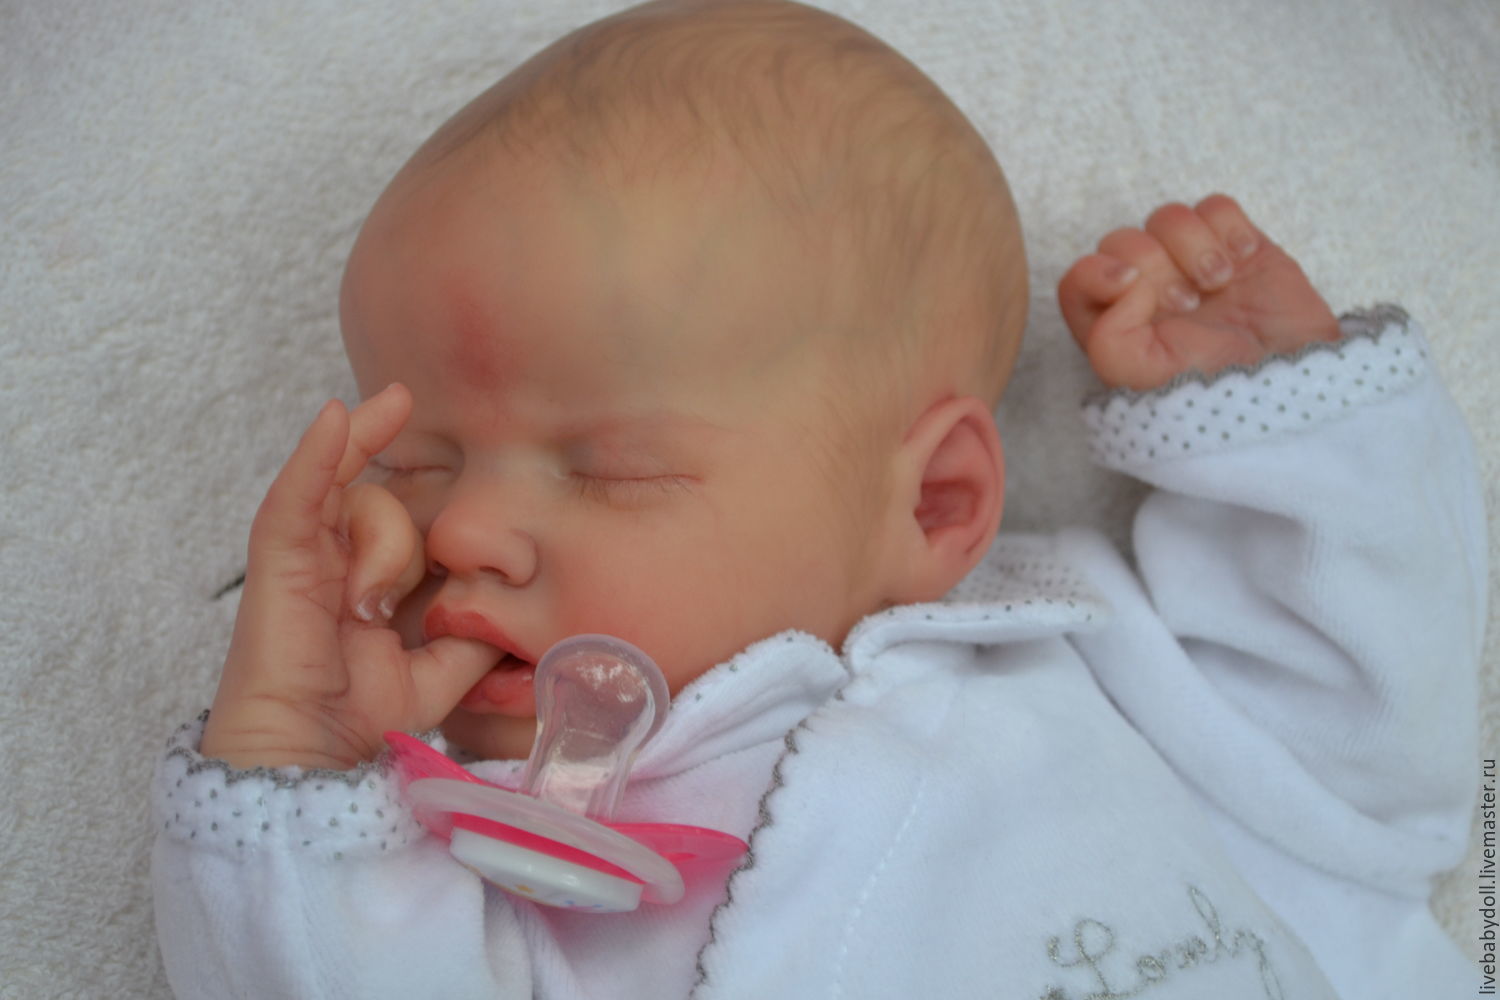 Custom Order for Reborn Noah Newborn Girl Doll | eBay